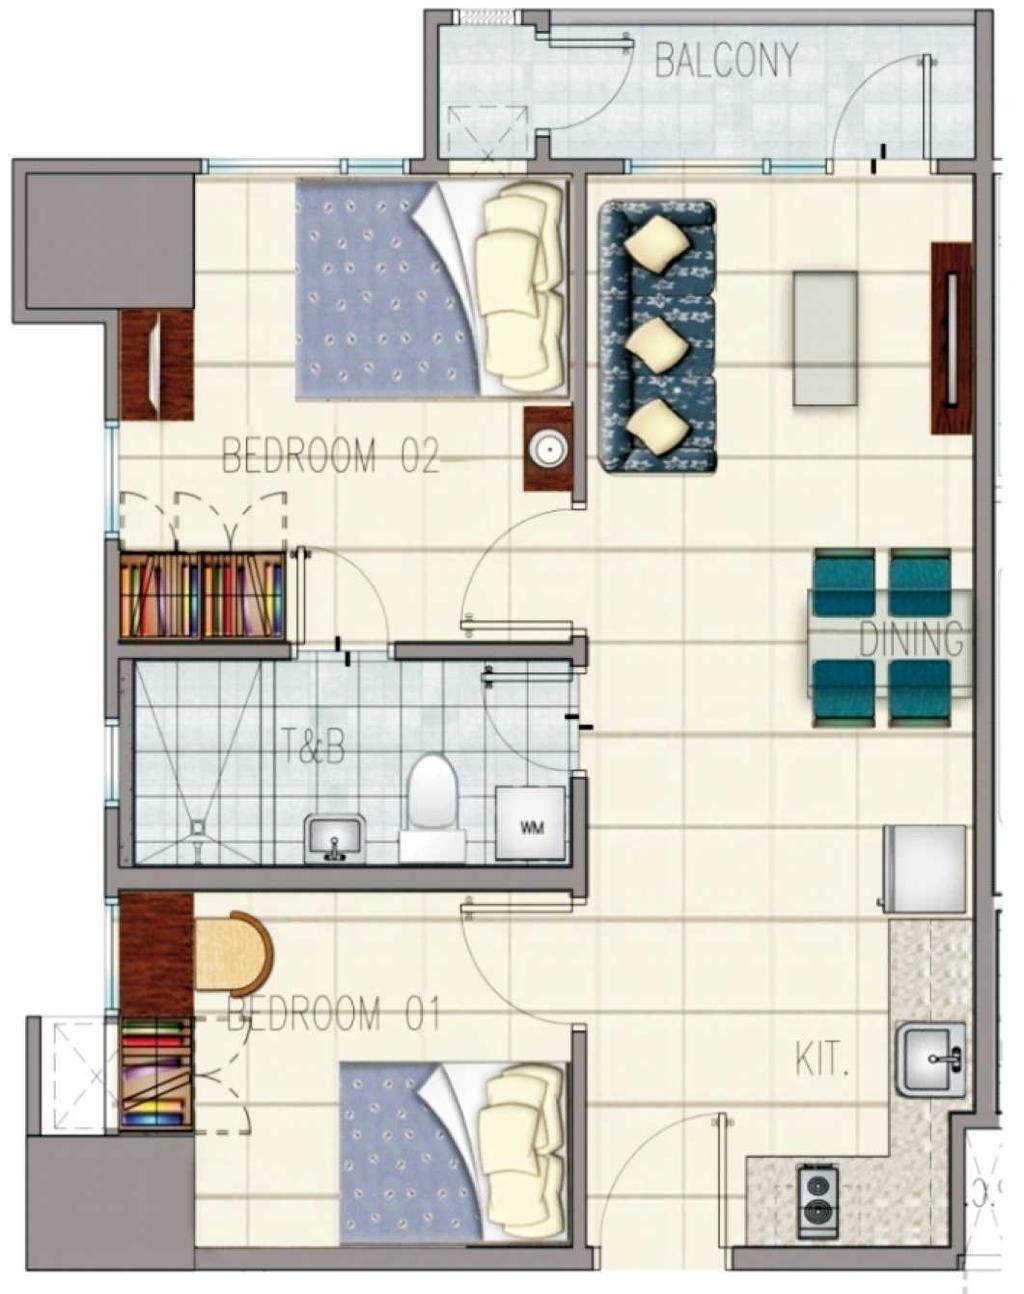 TOWER 2: BAHIA TYPICAL 2-BEDROOM UNITS LEGEND 2-Bedroom Units S E W